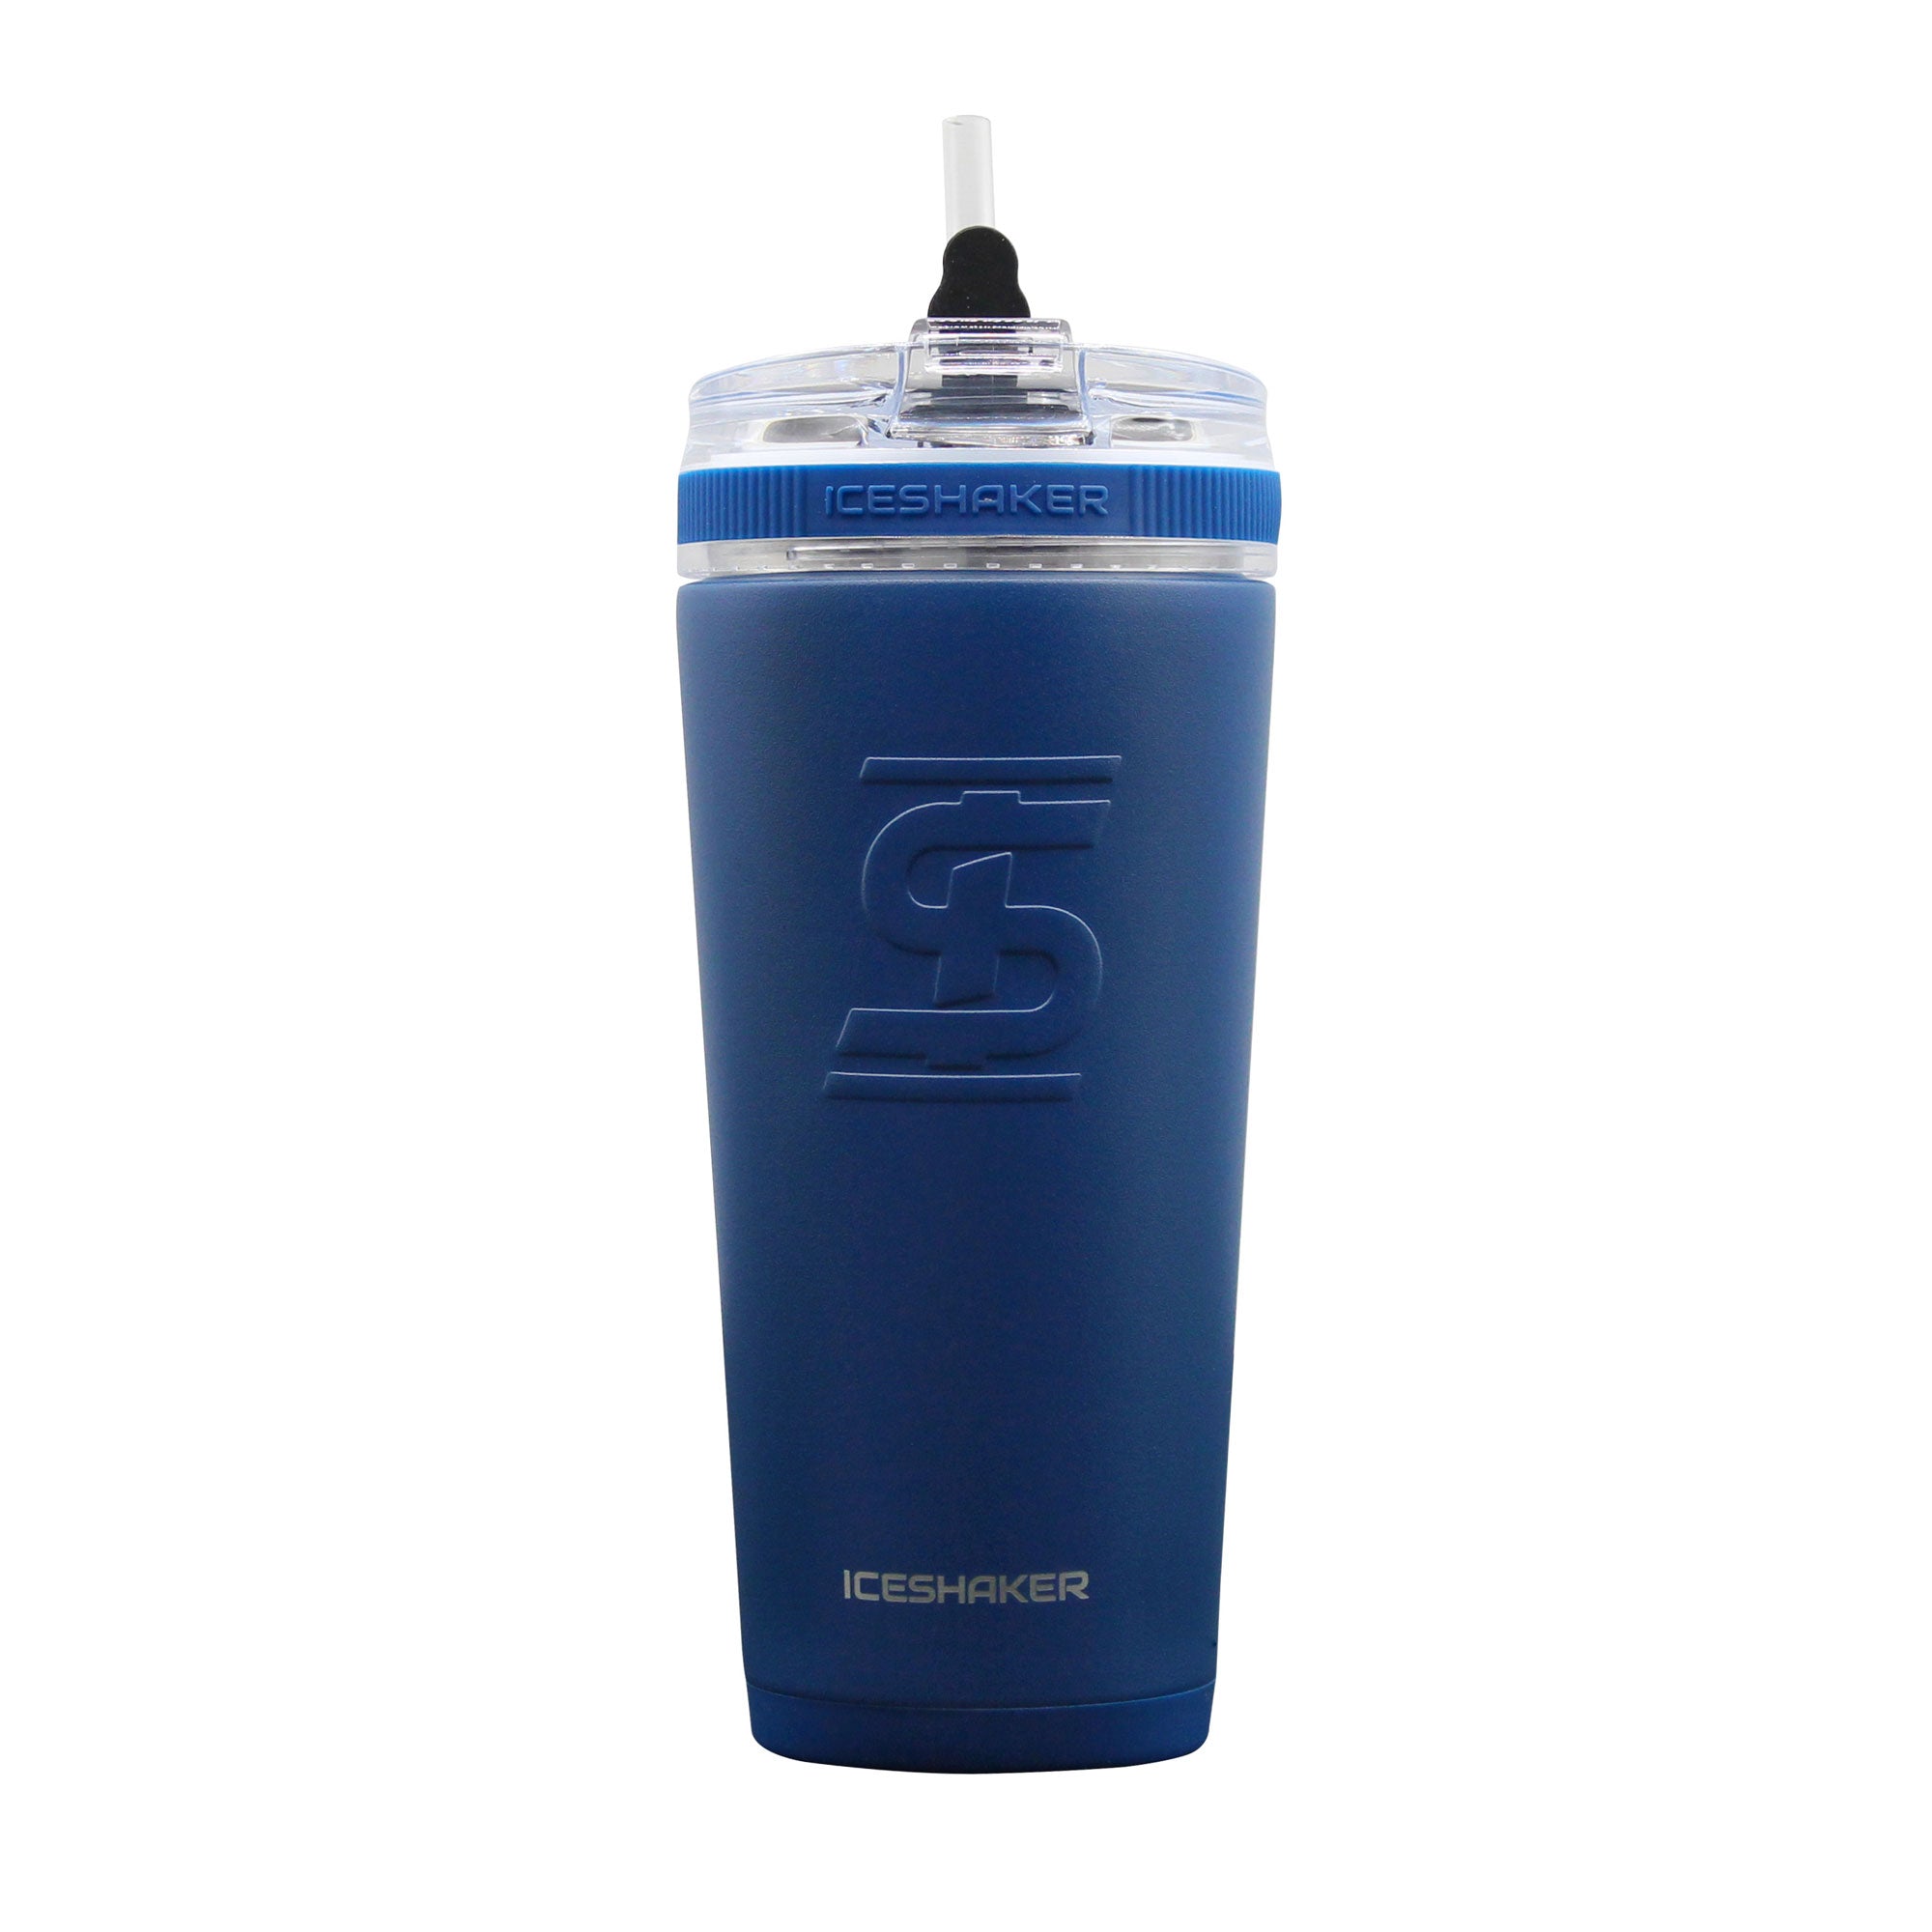 Stay-In-Bottle Reusable Silicone Straws for BlenderBottle Shaker Bottles, Black and Blue (2 Pack)